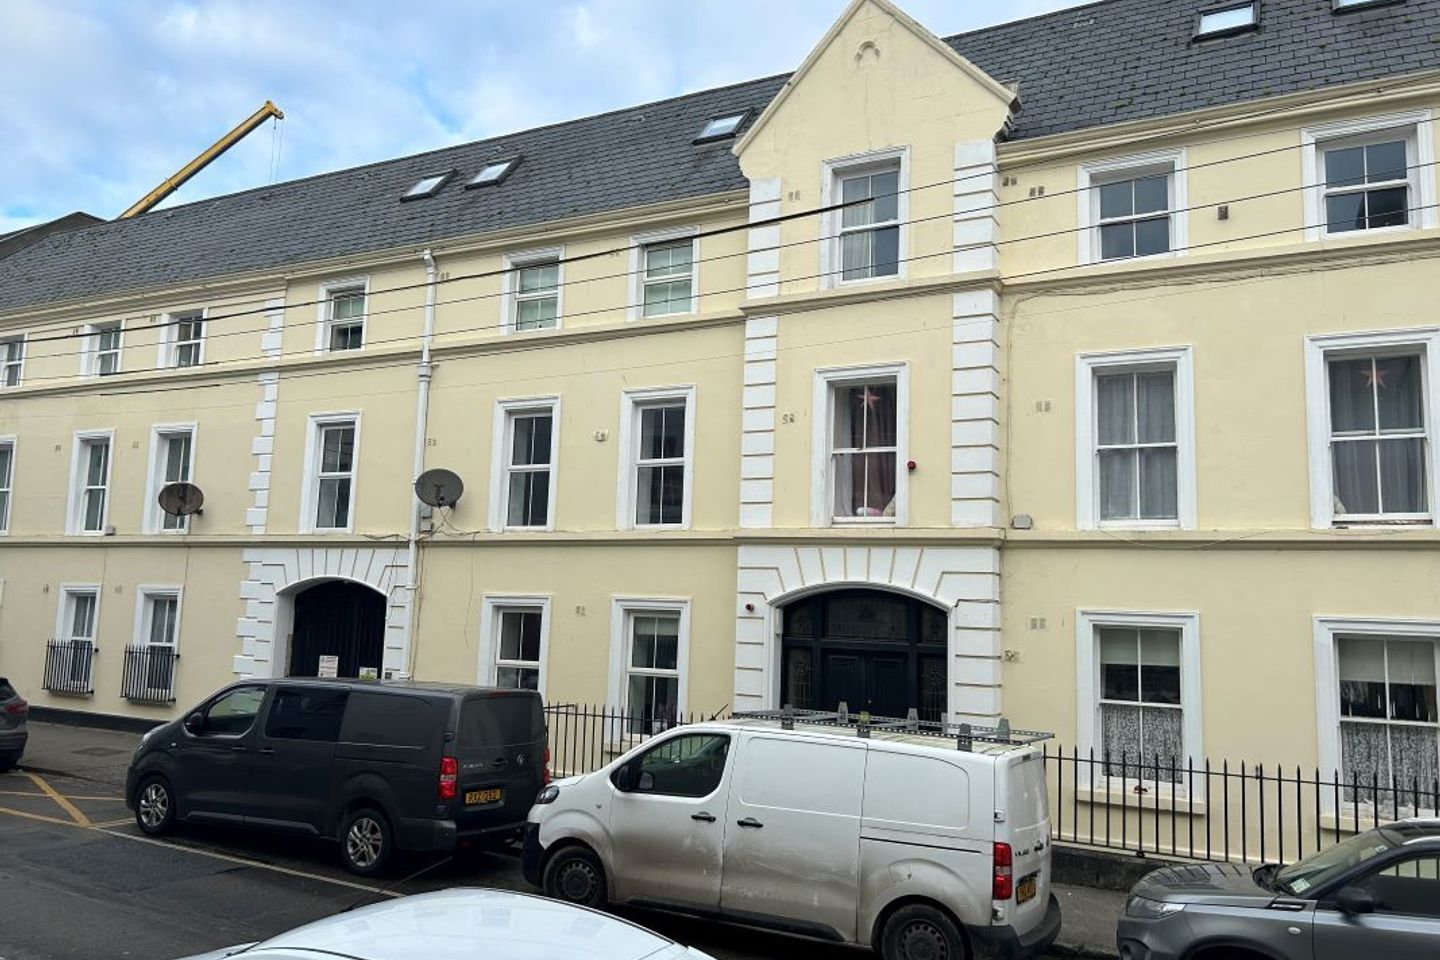 Apt 6, Fair Street House, Drogheda, Co. Louth, A92FP22